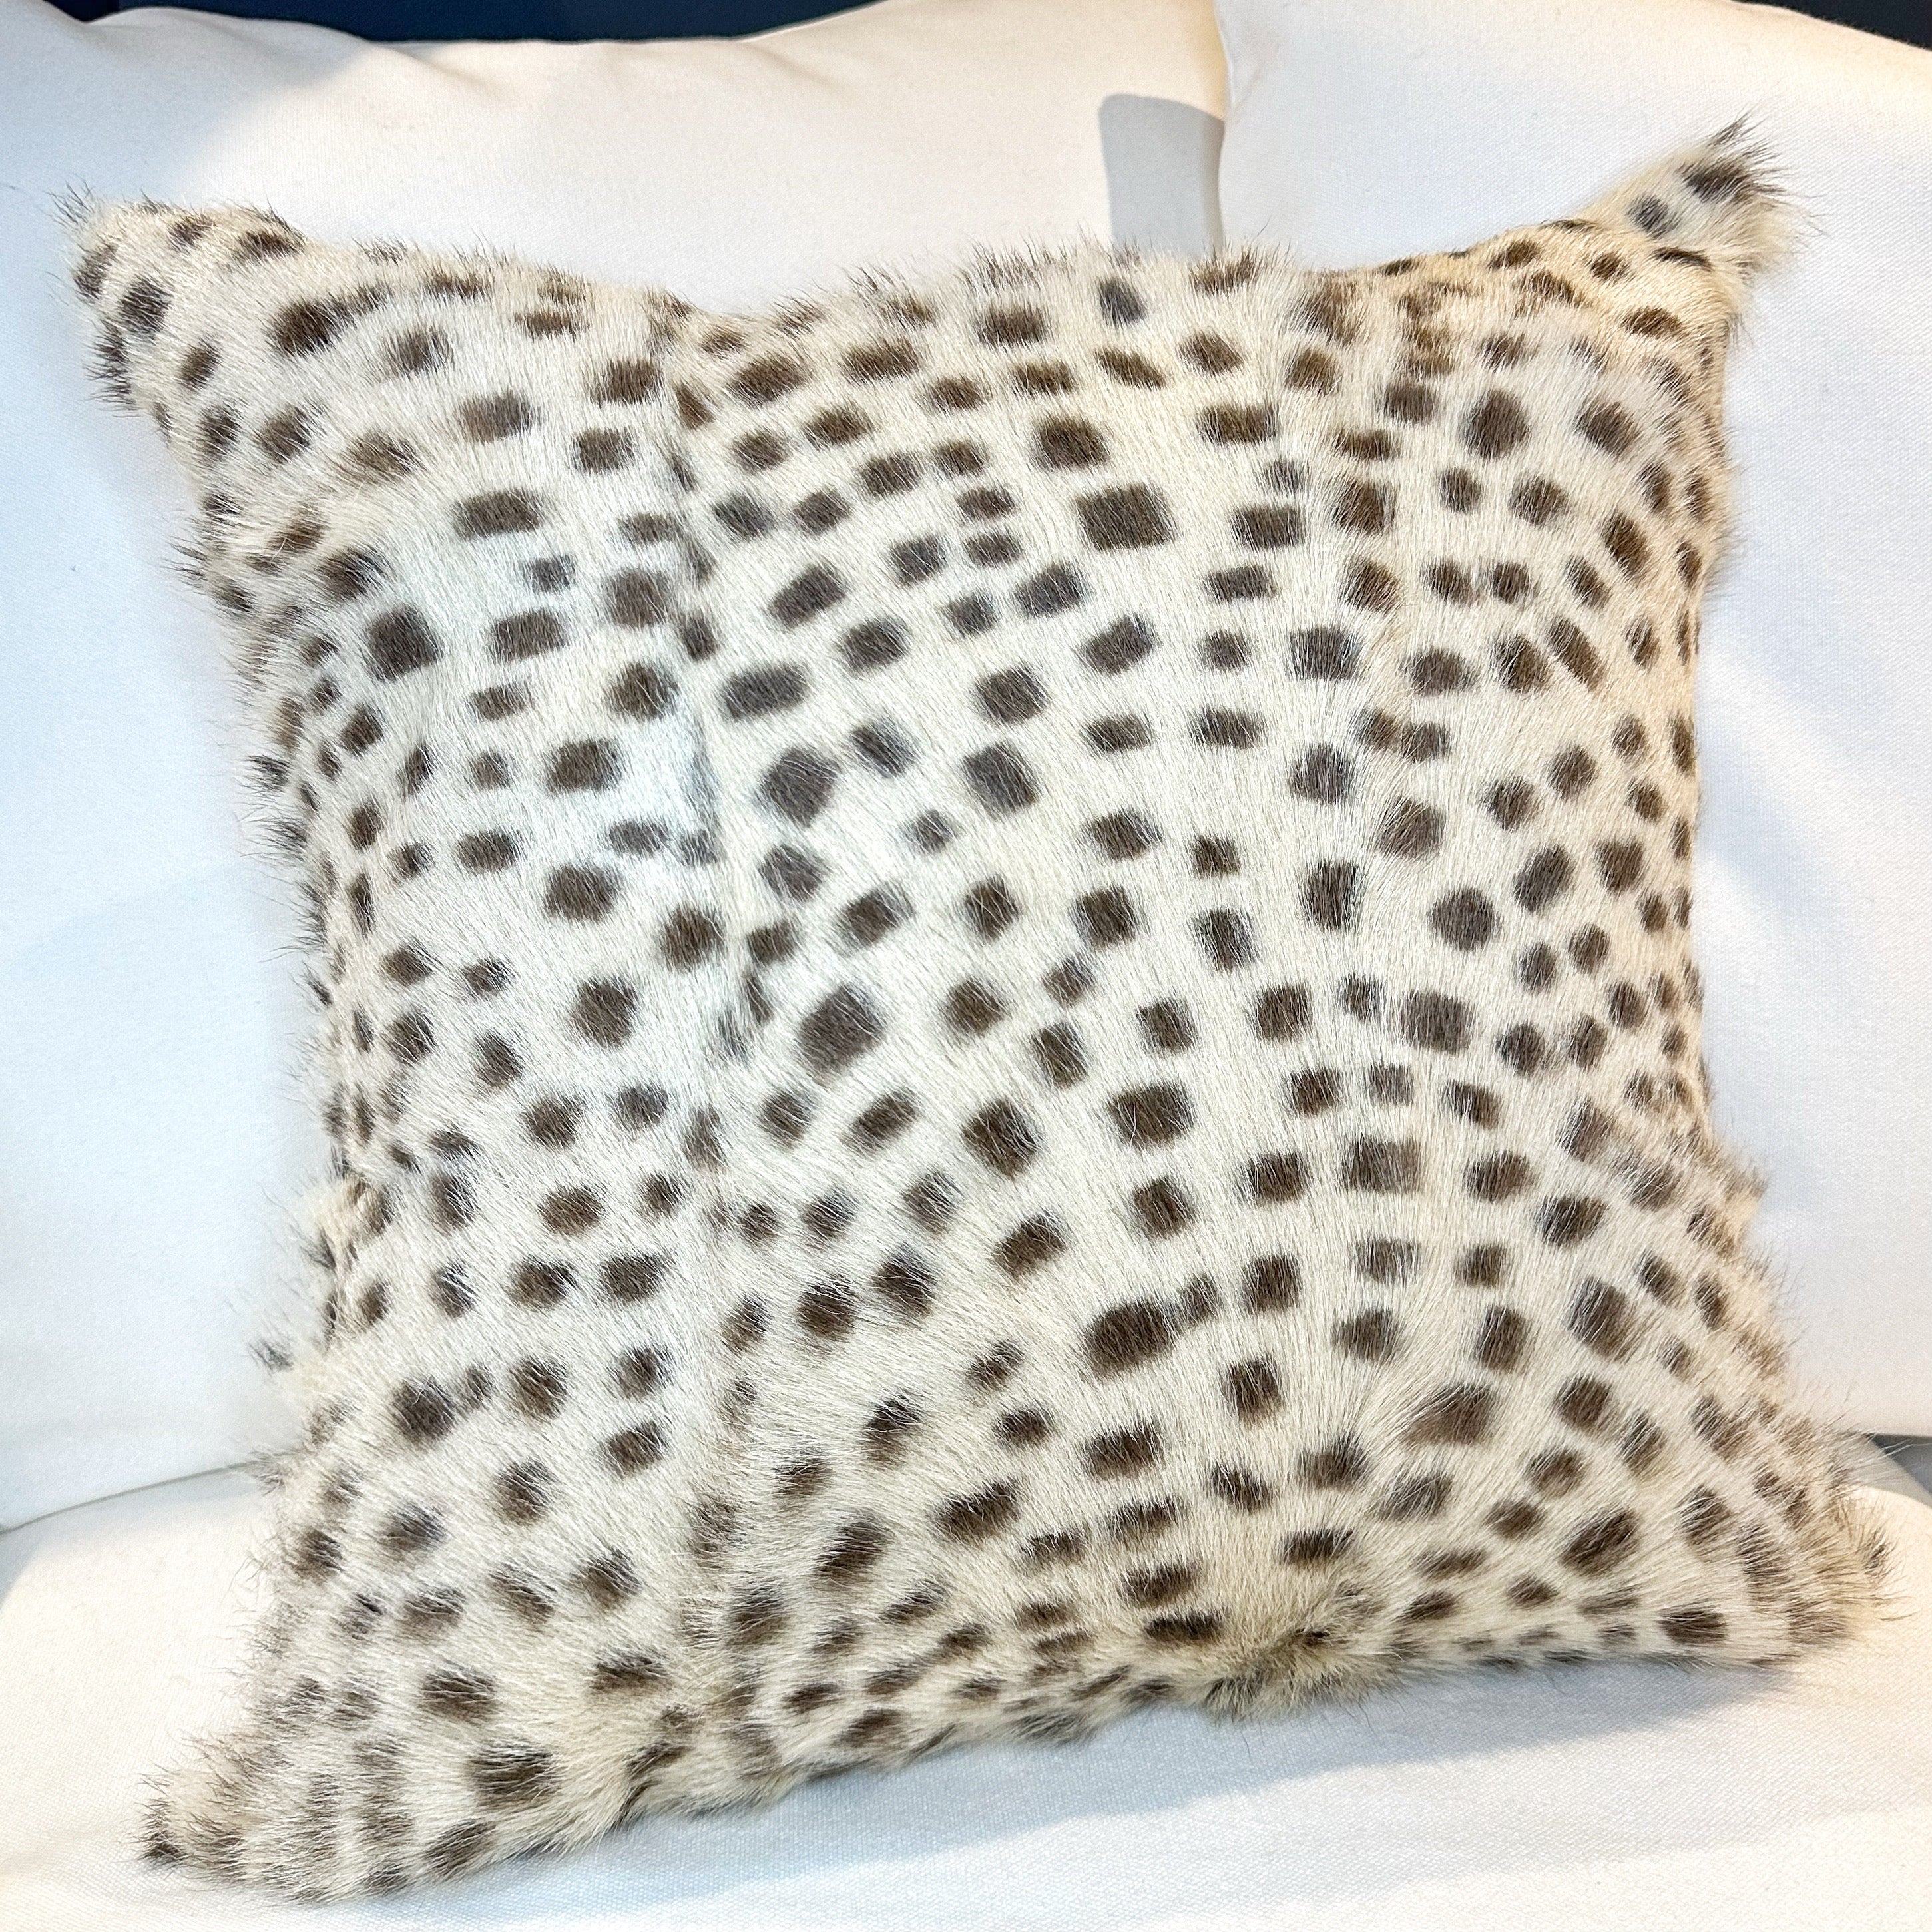 Leopard Print Goat Fur Cushion